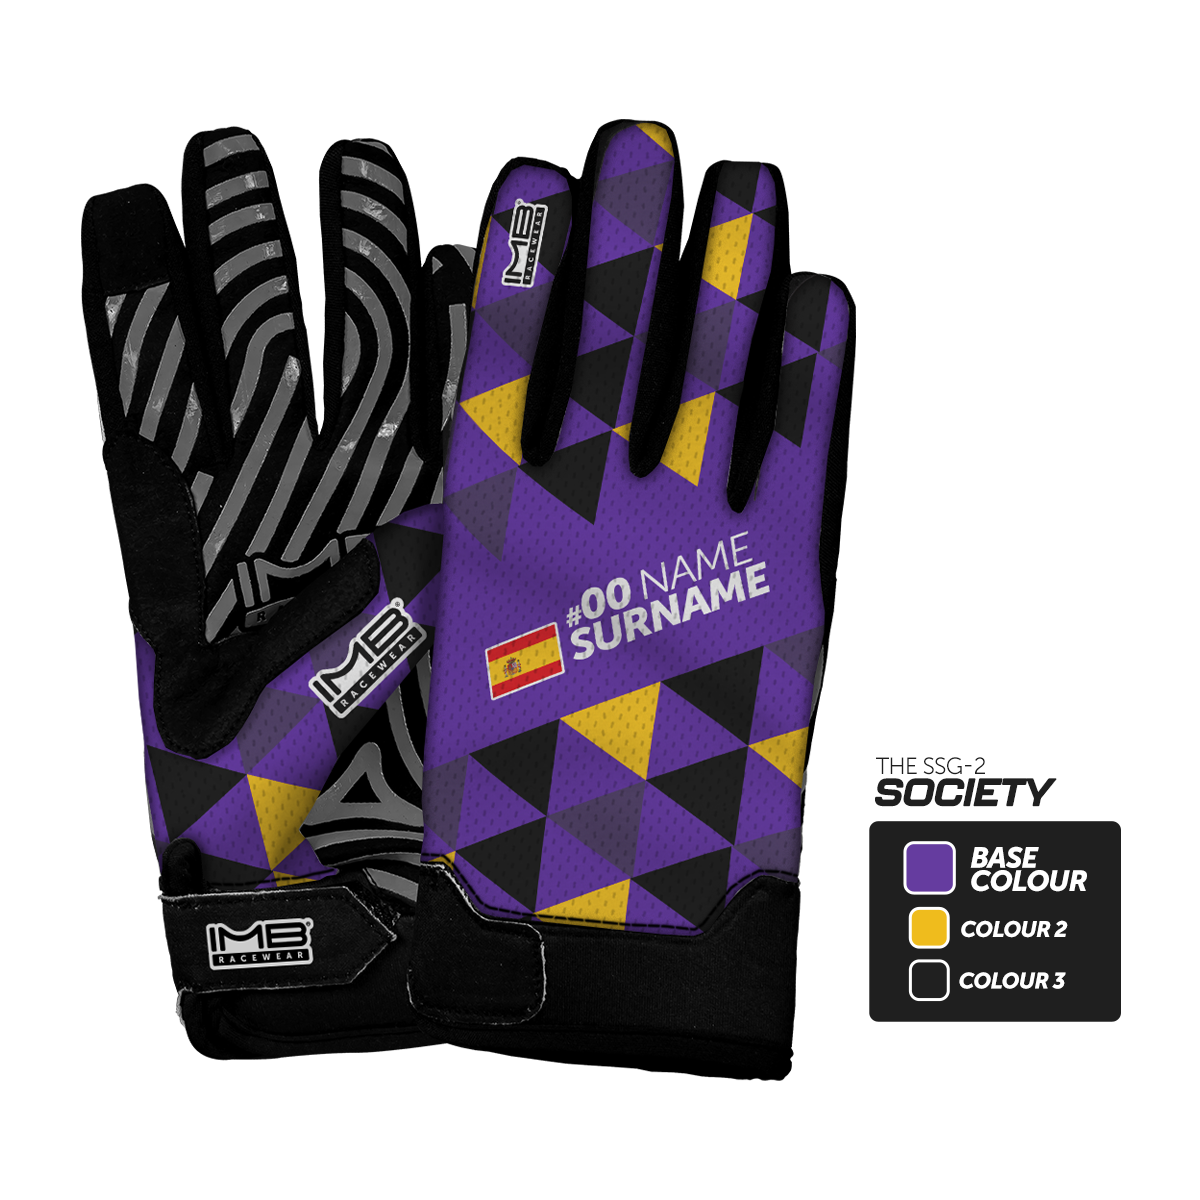 The Society SSG-2 Short Sim Racing Gloves